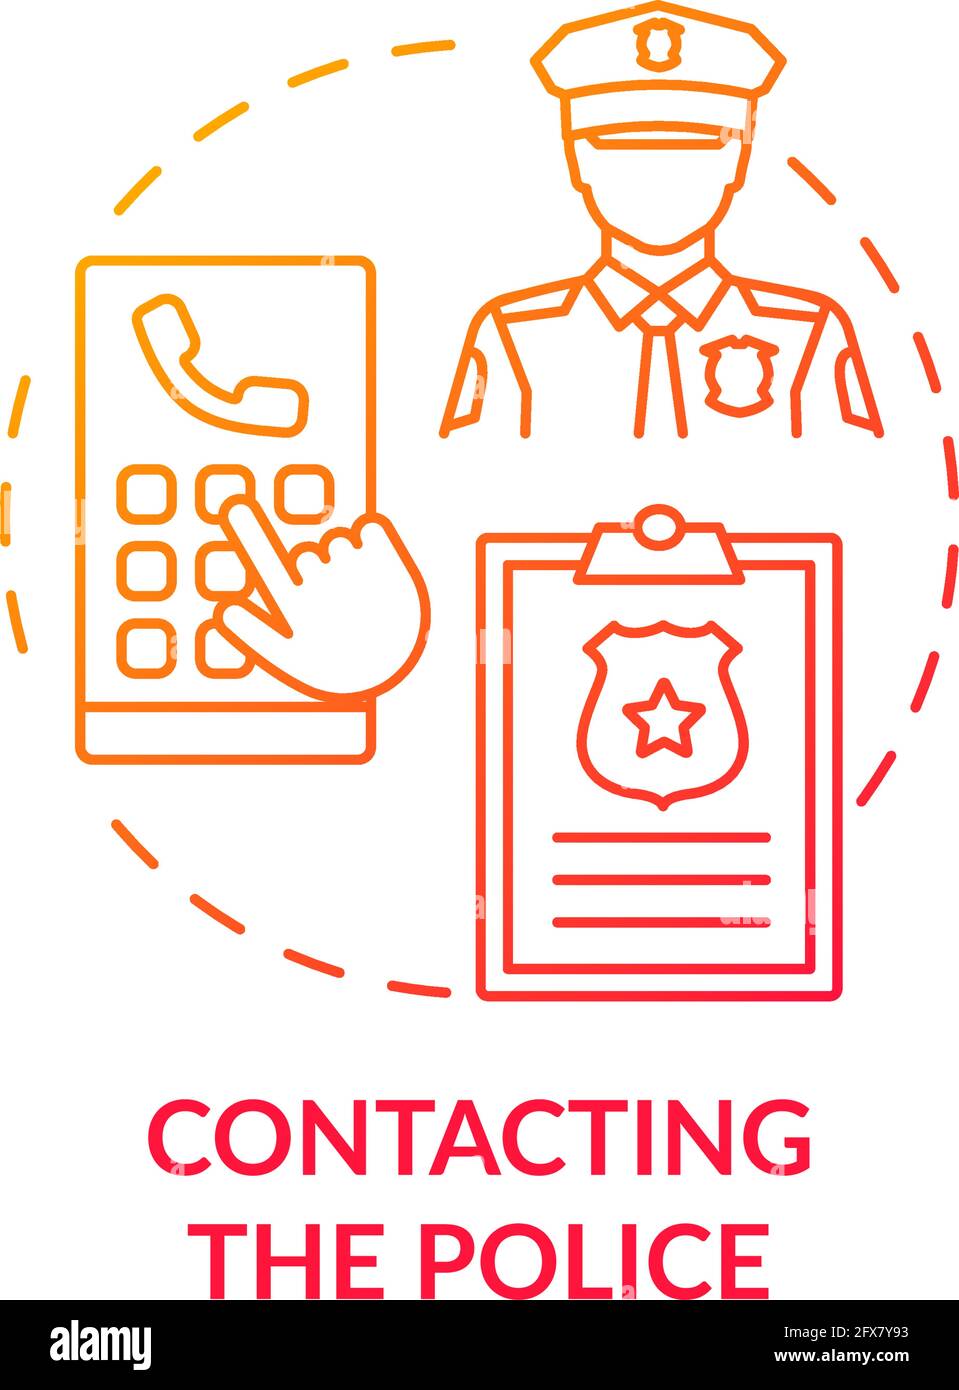 Contacting police concept icon Stock Vector